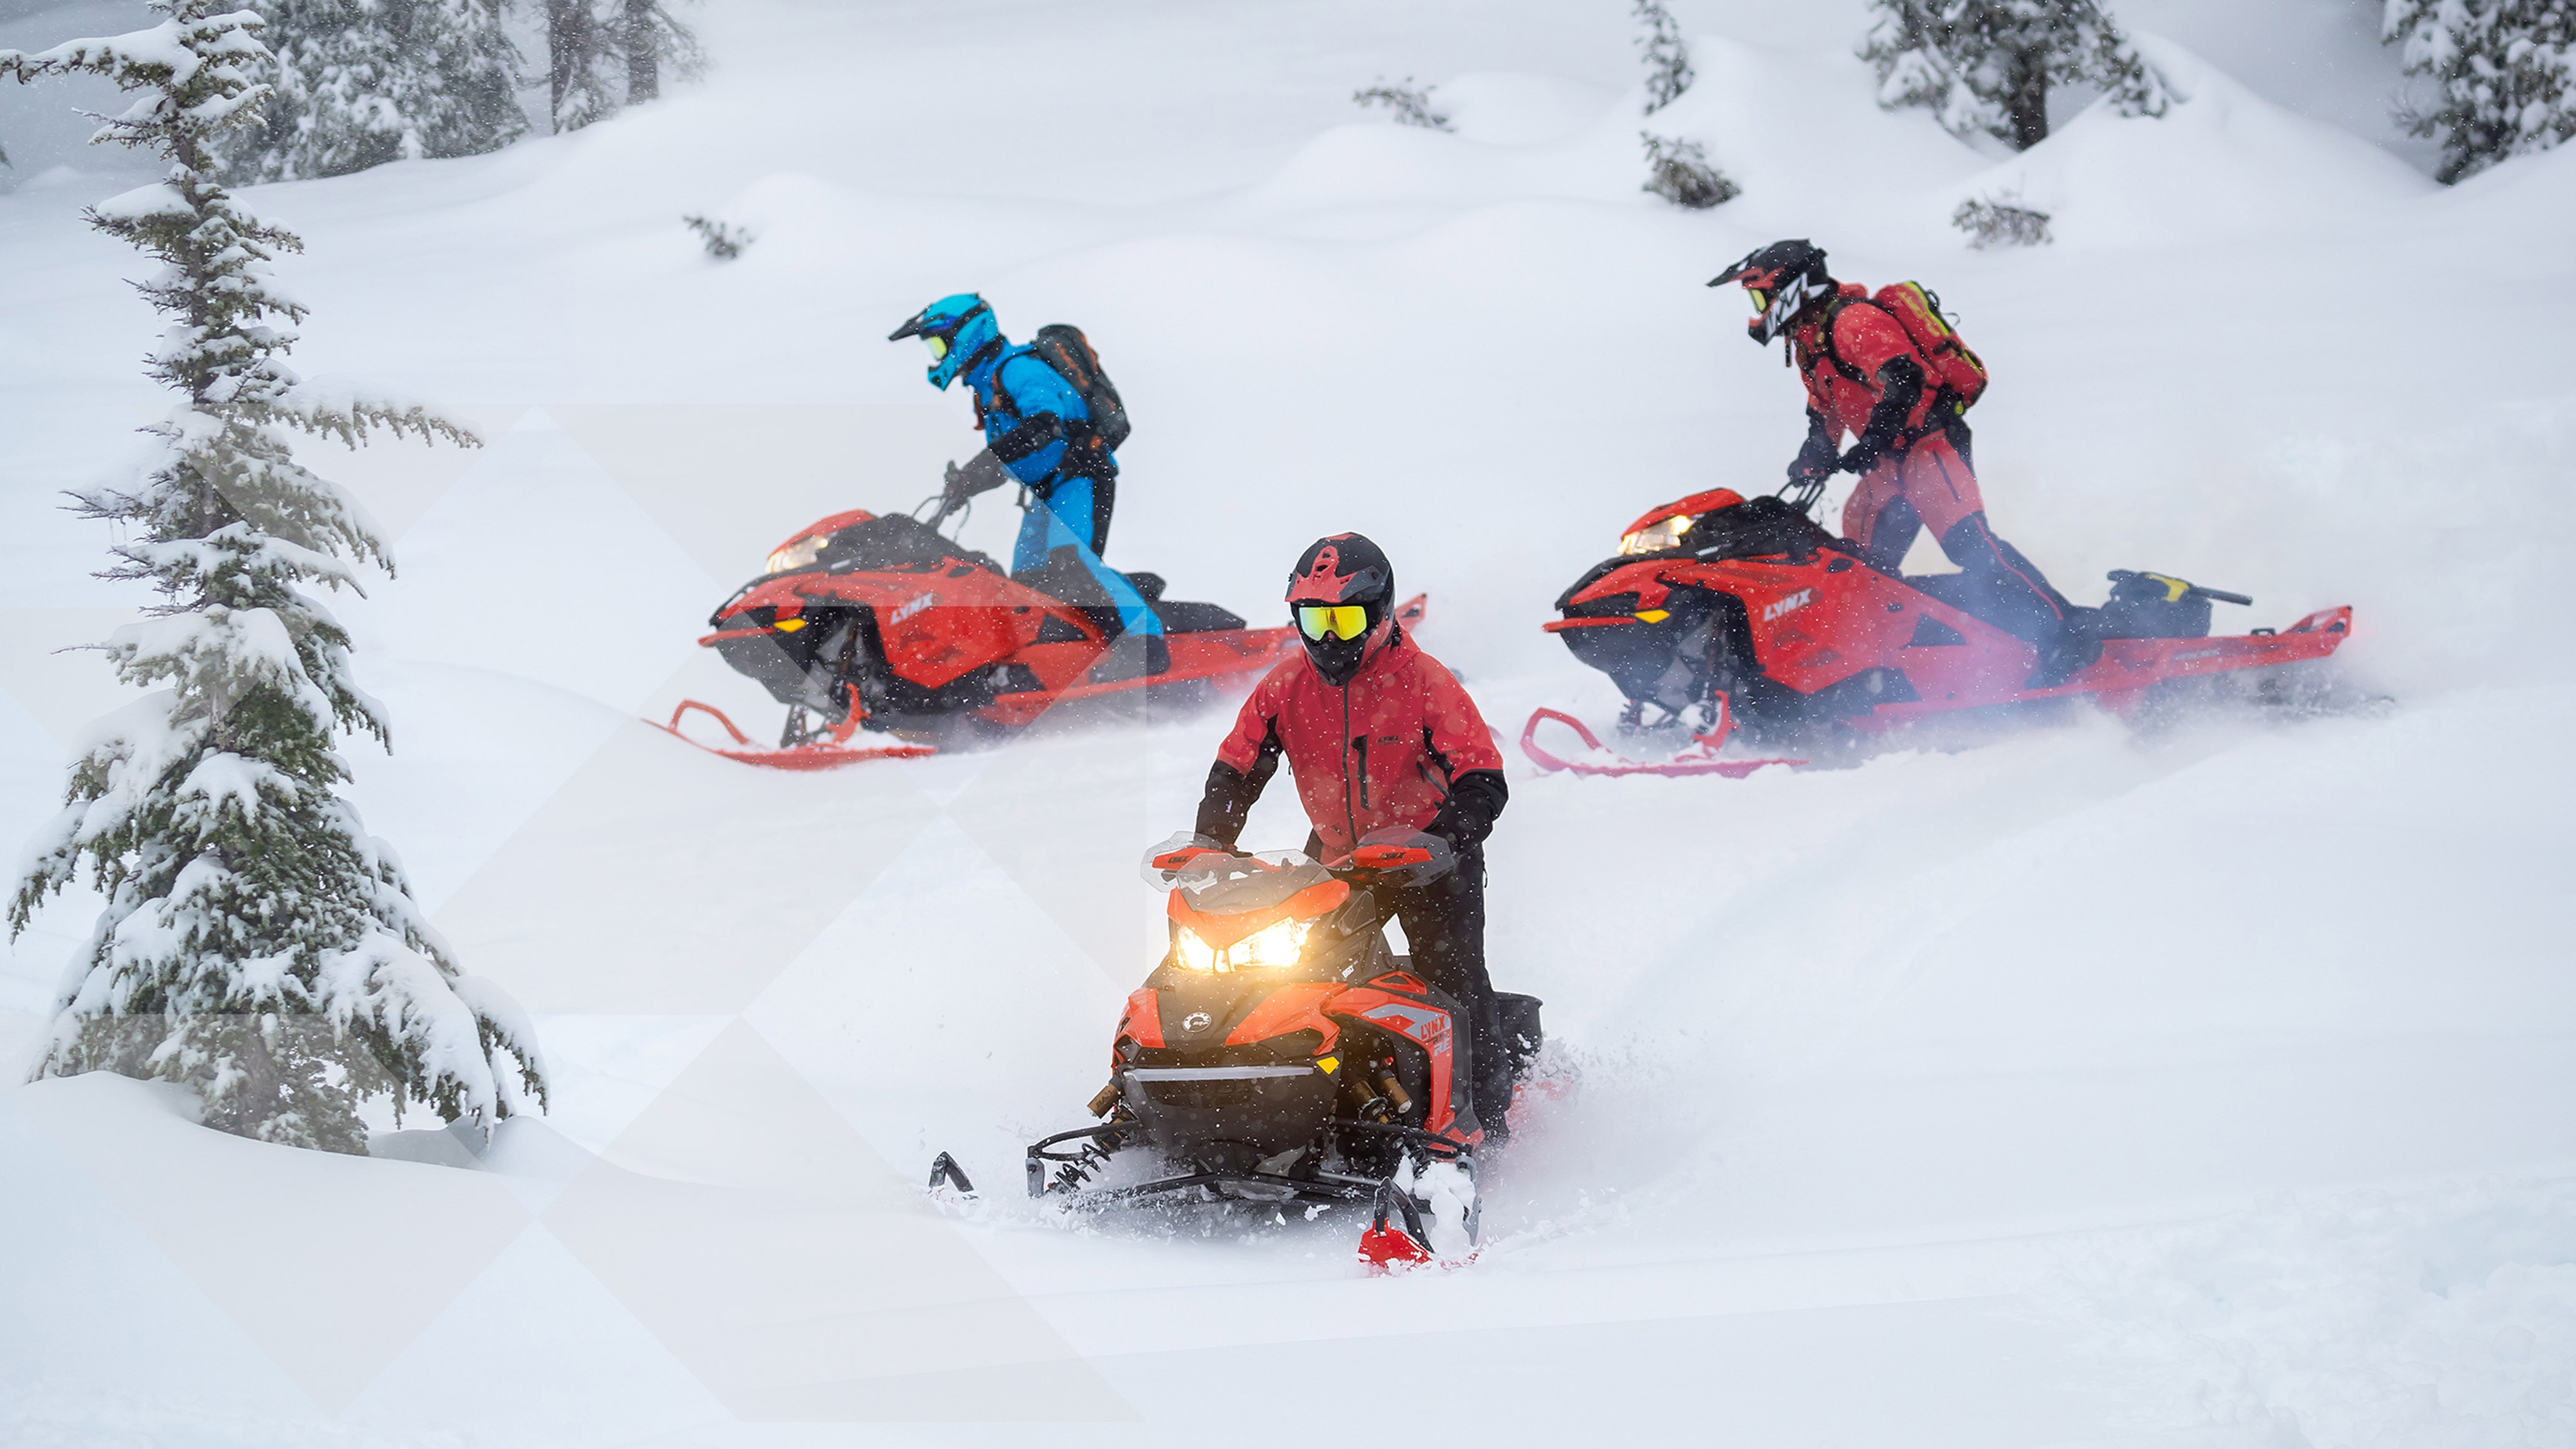 Men riding 2022 Lynx snowmobiles